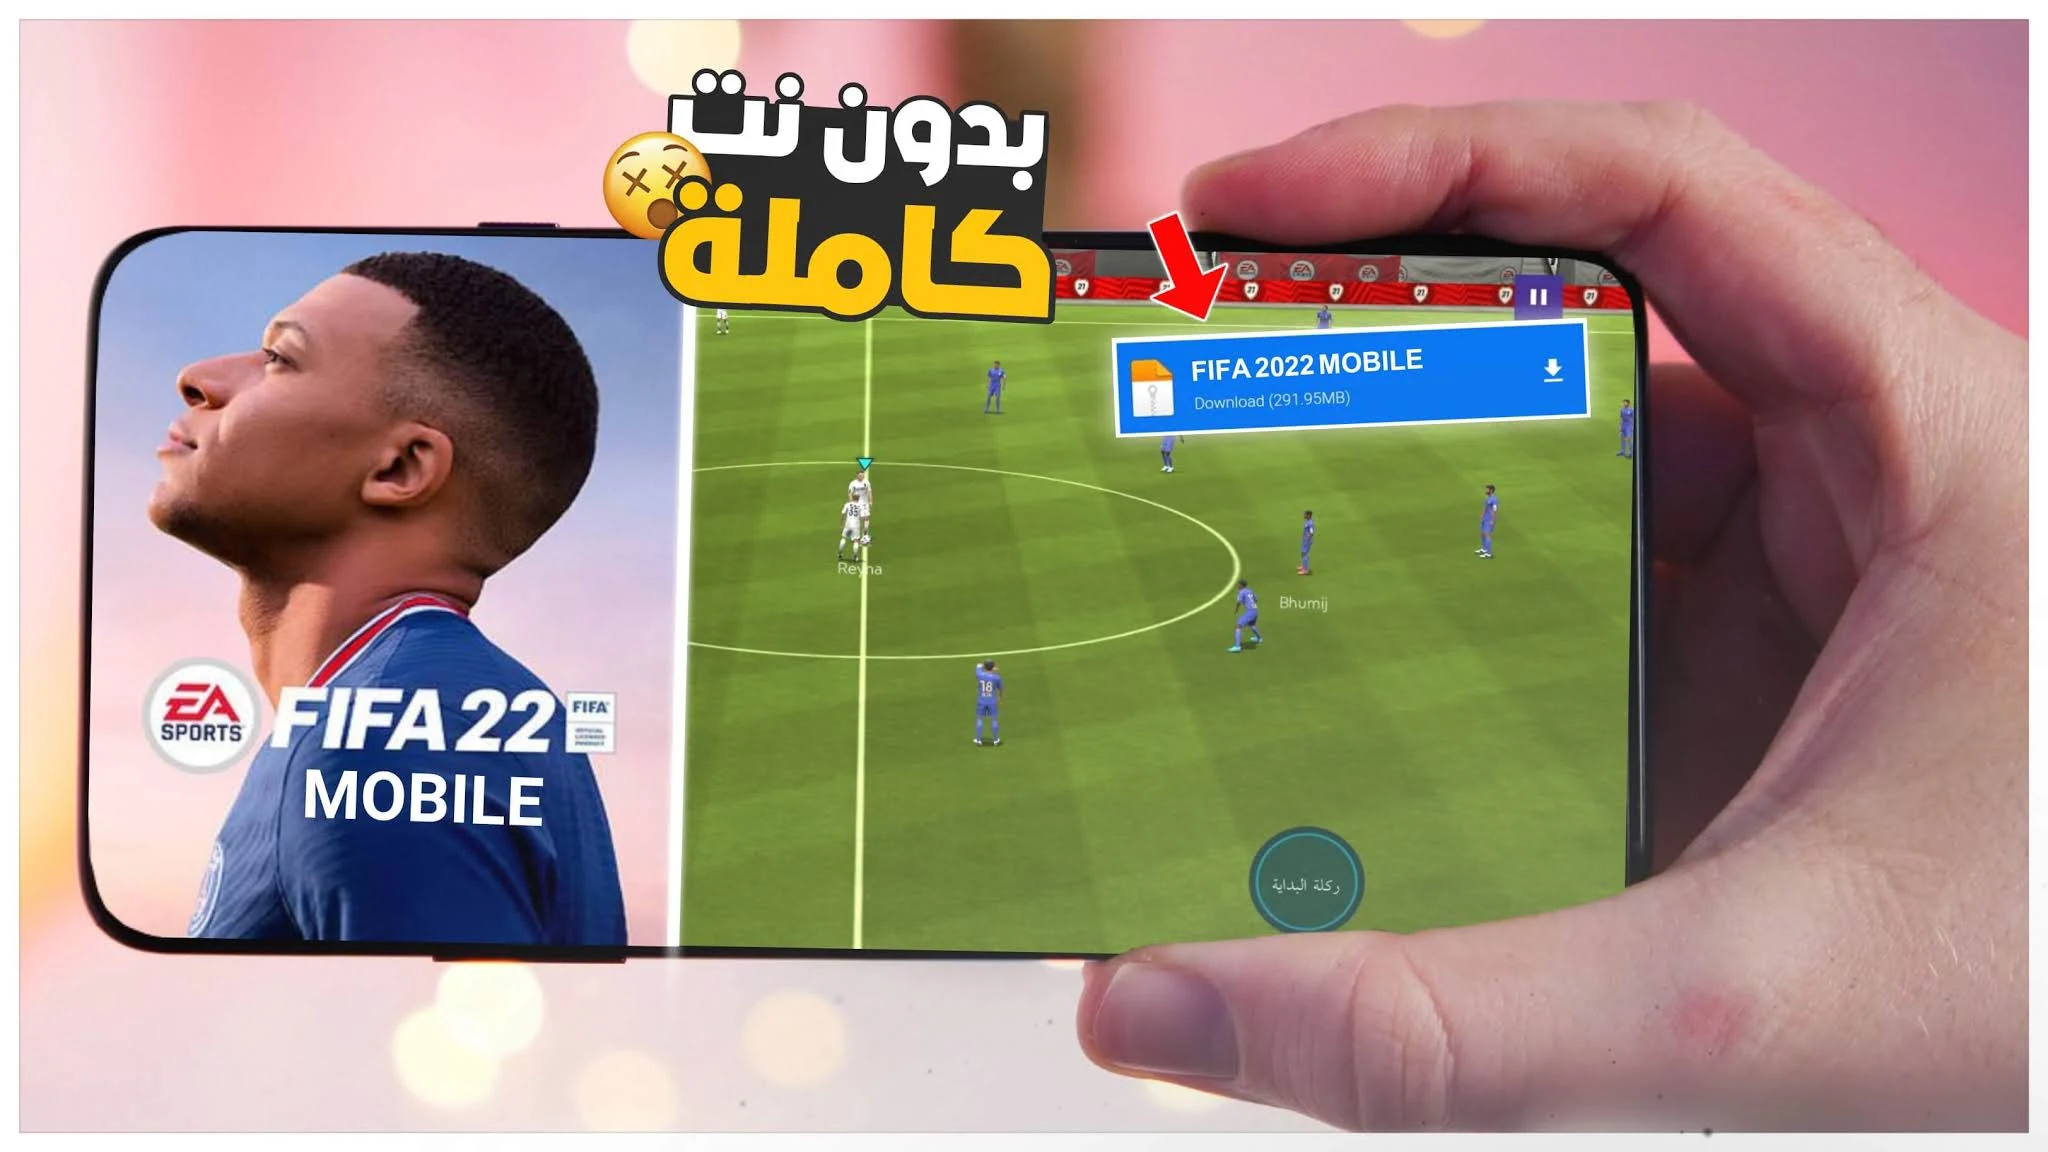 تحميل لعبة FIFA 22 Mobile Android Offline للاندرويد من ميديا فاير برابط مباشر | FIFA 2022 Apk + OBB Data